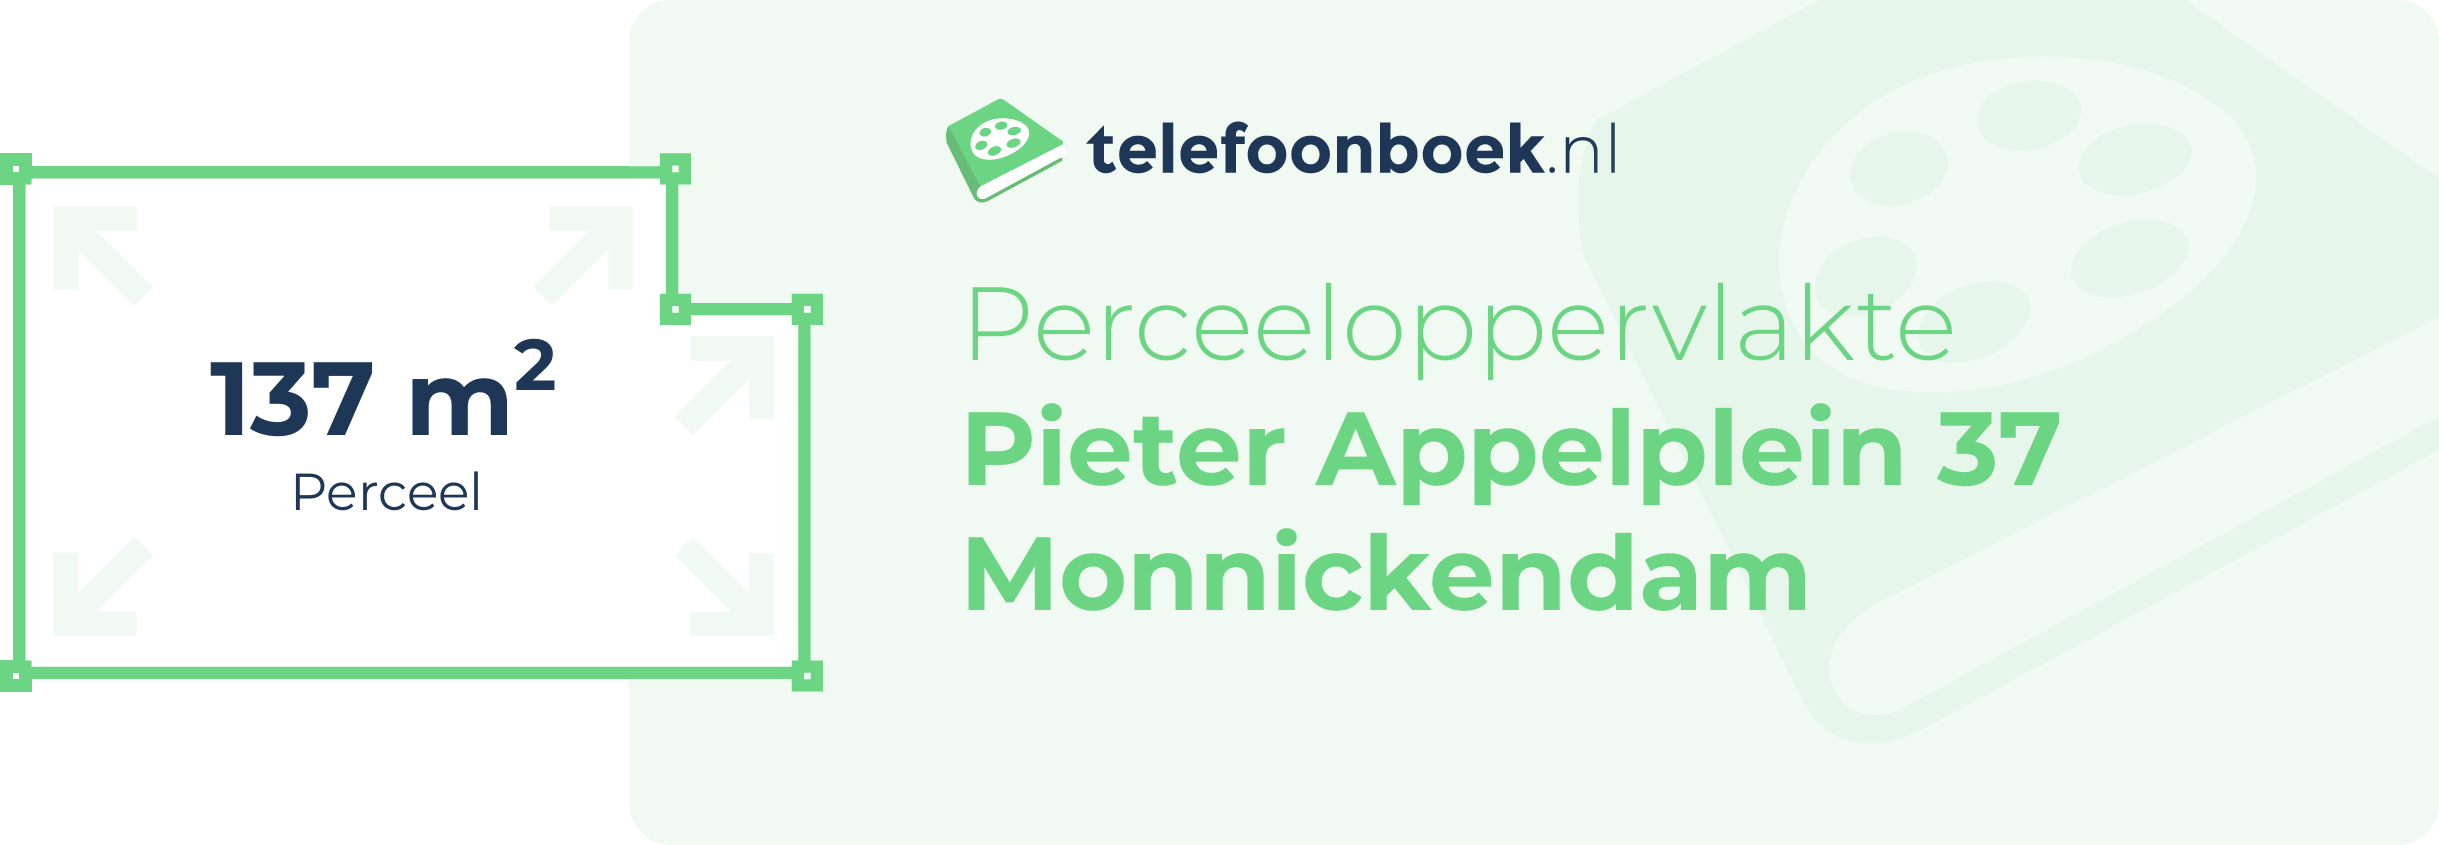 Perceeloppervlakte Pieter Appelplein 37 Monnickendam